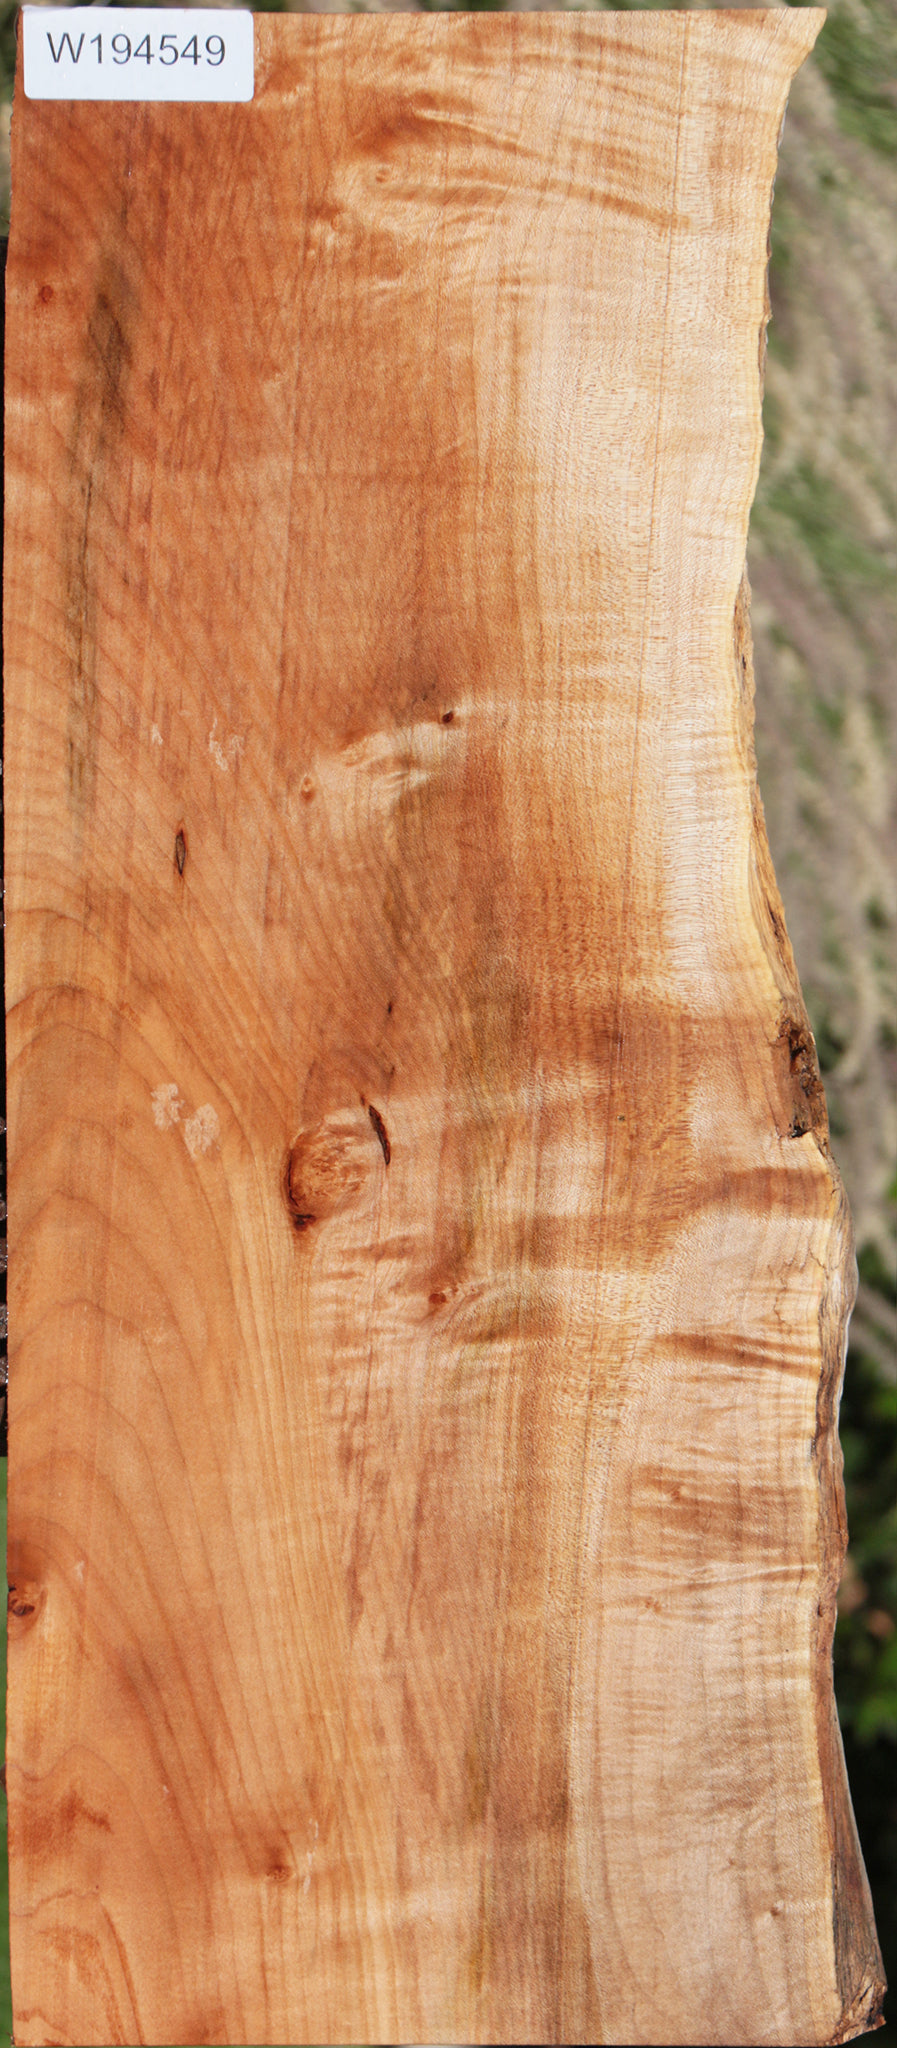 Western Maple Live Edge Lumber